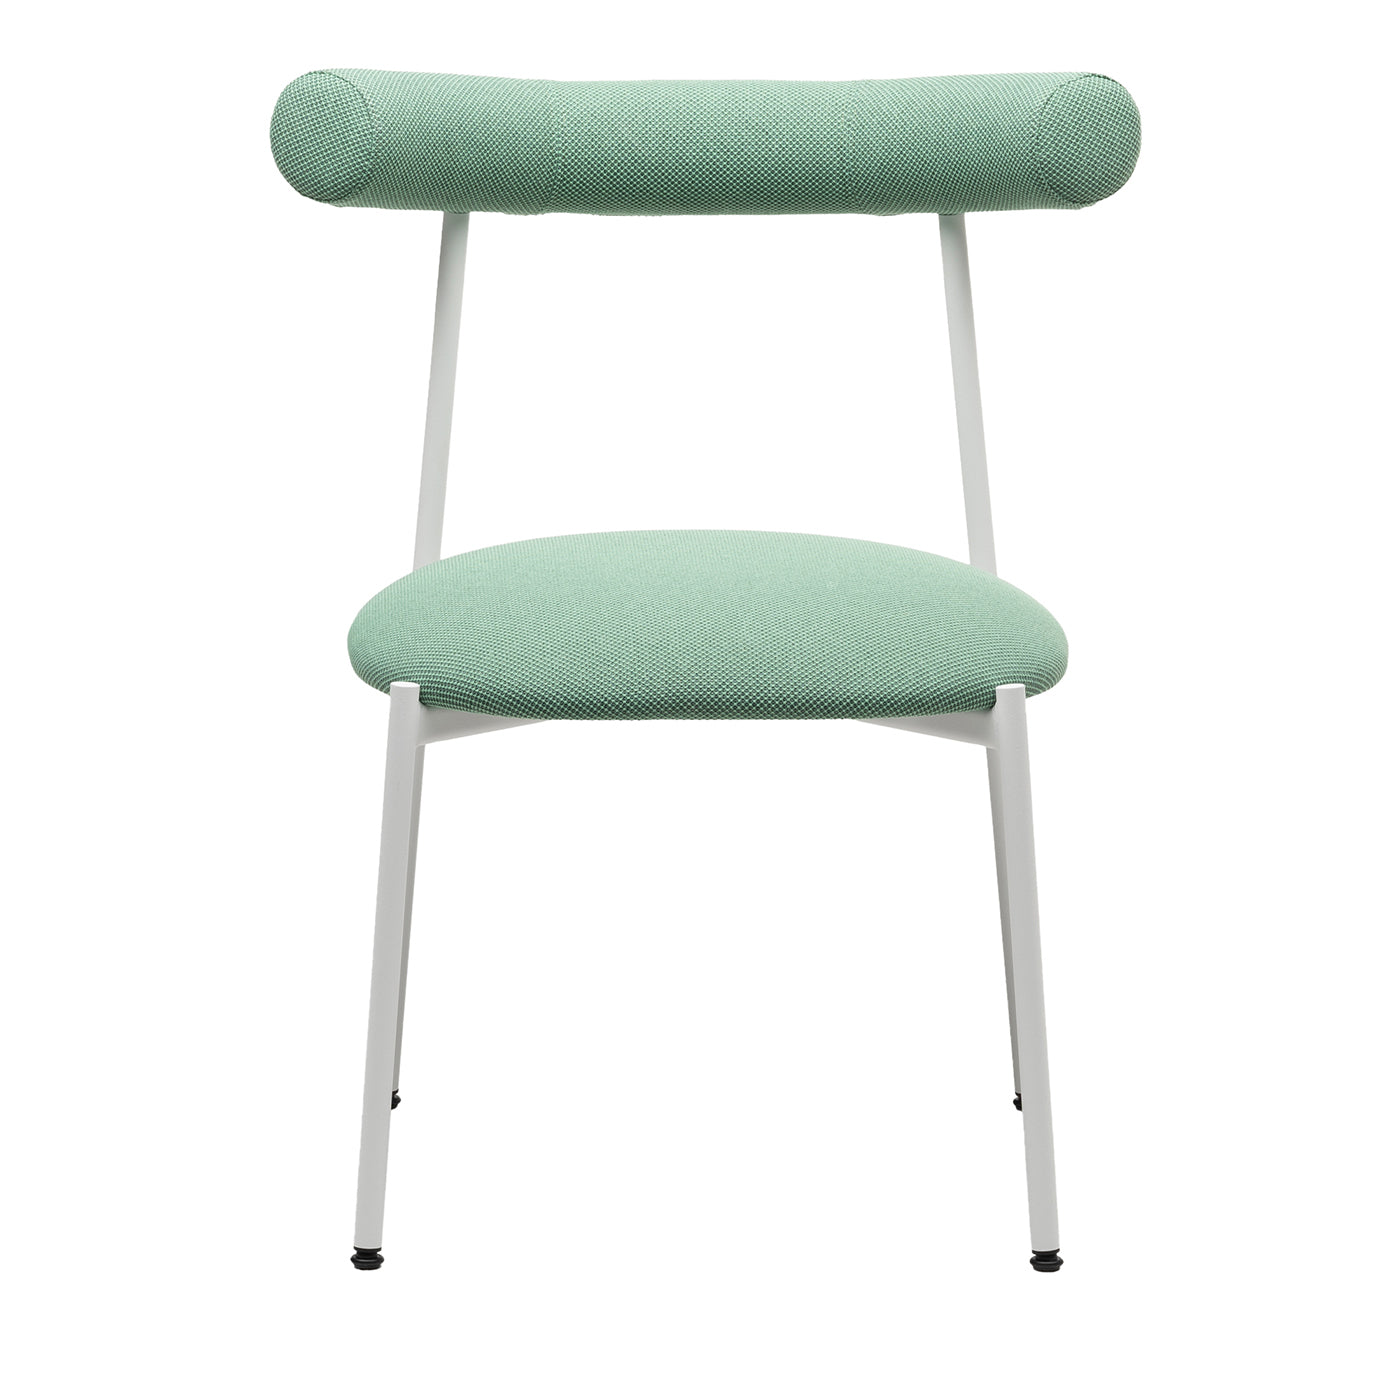 Pampa S Sage-Green & White Chair by Studio Pastina - Main view